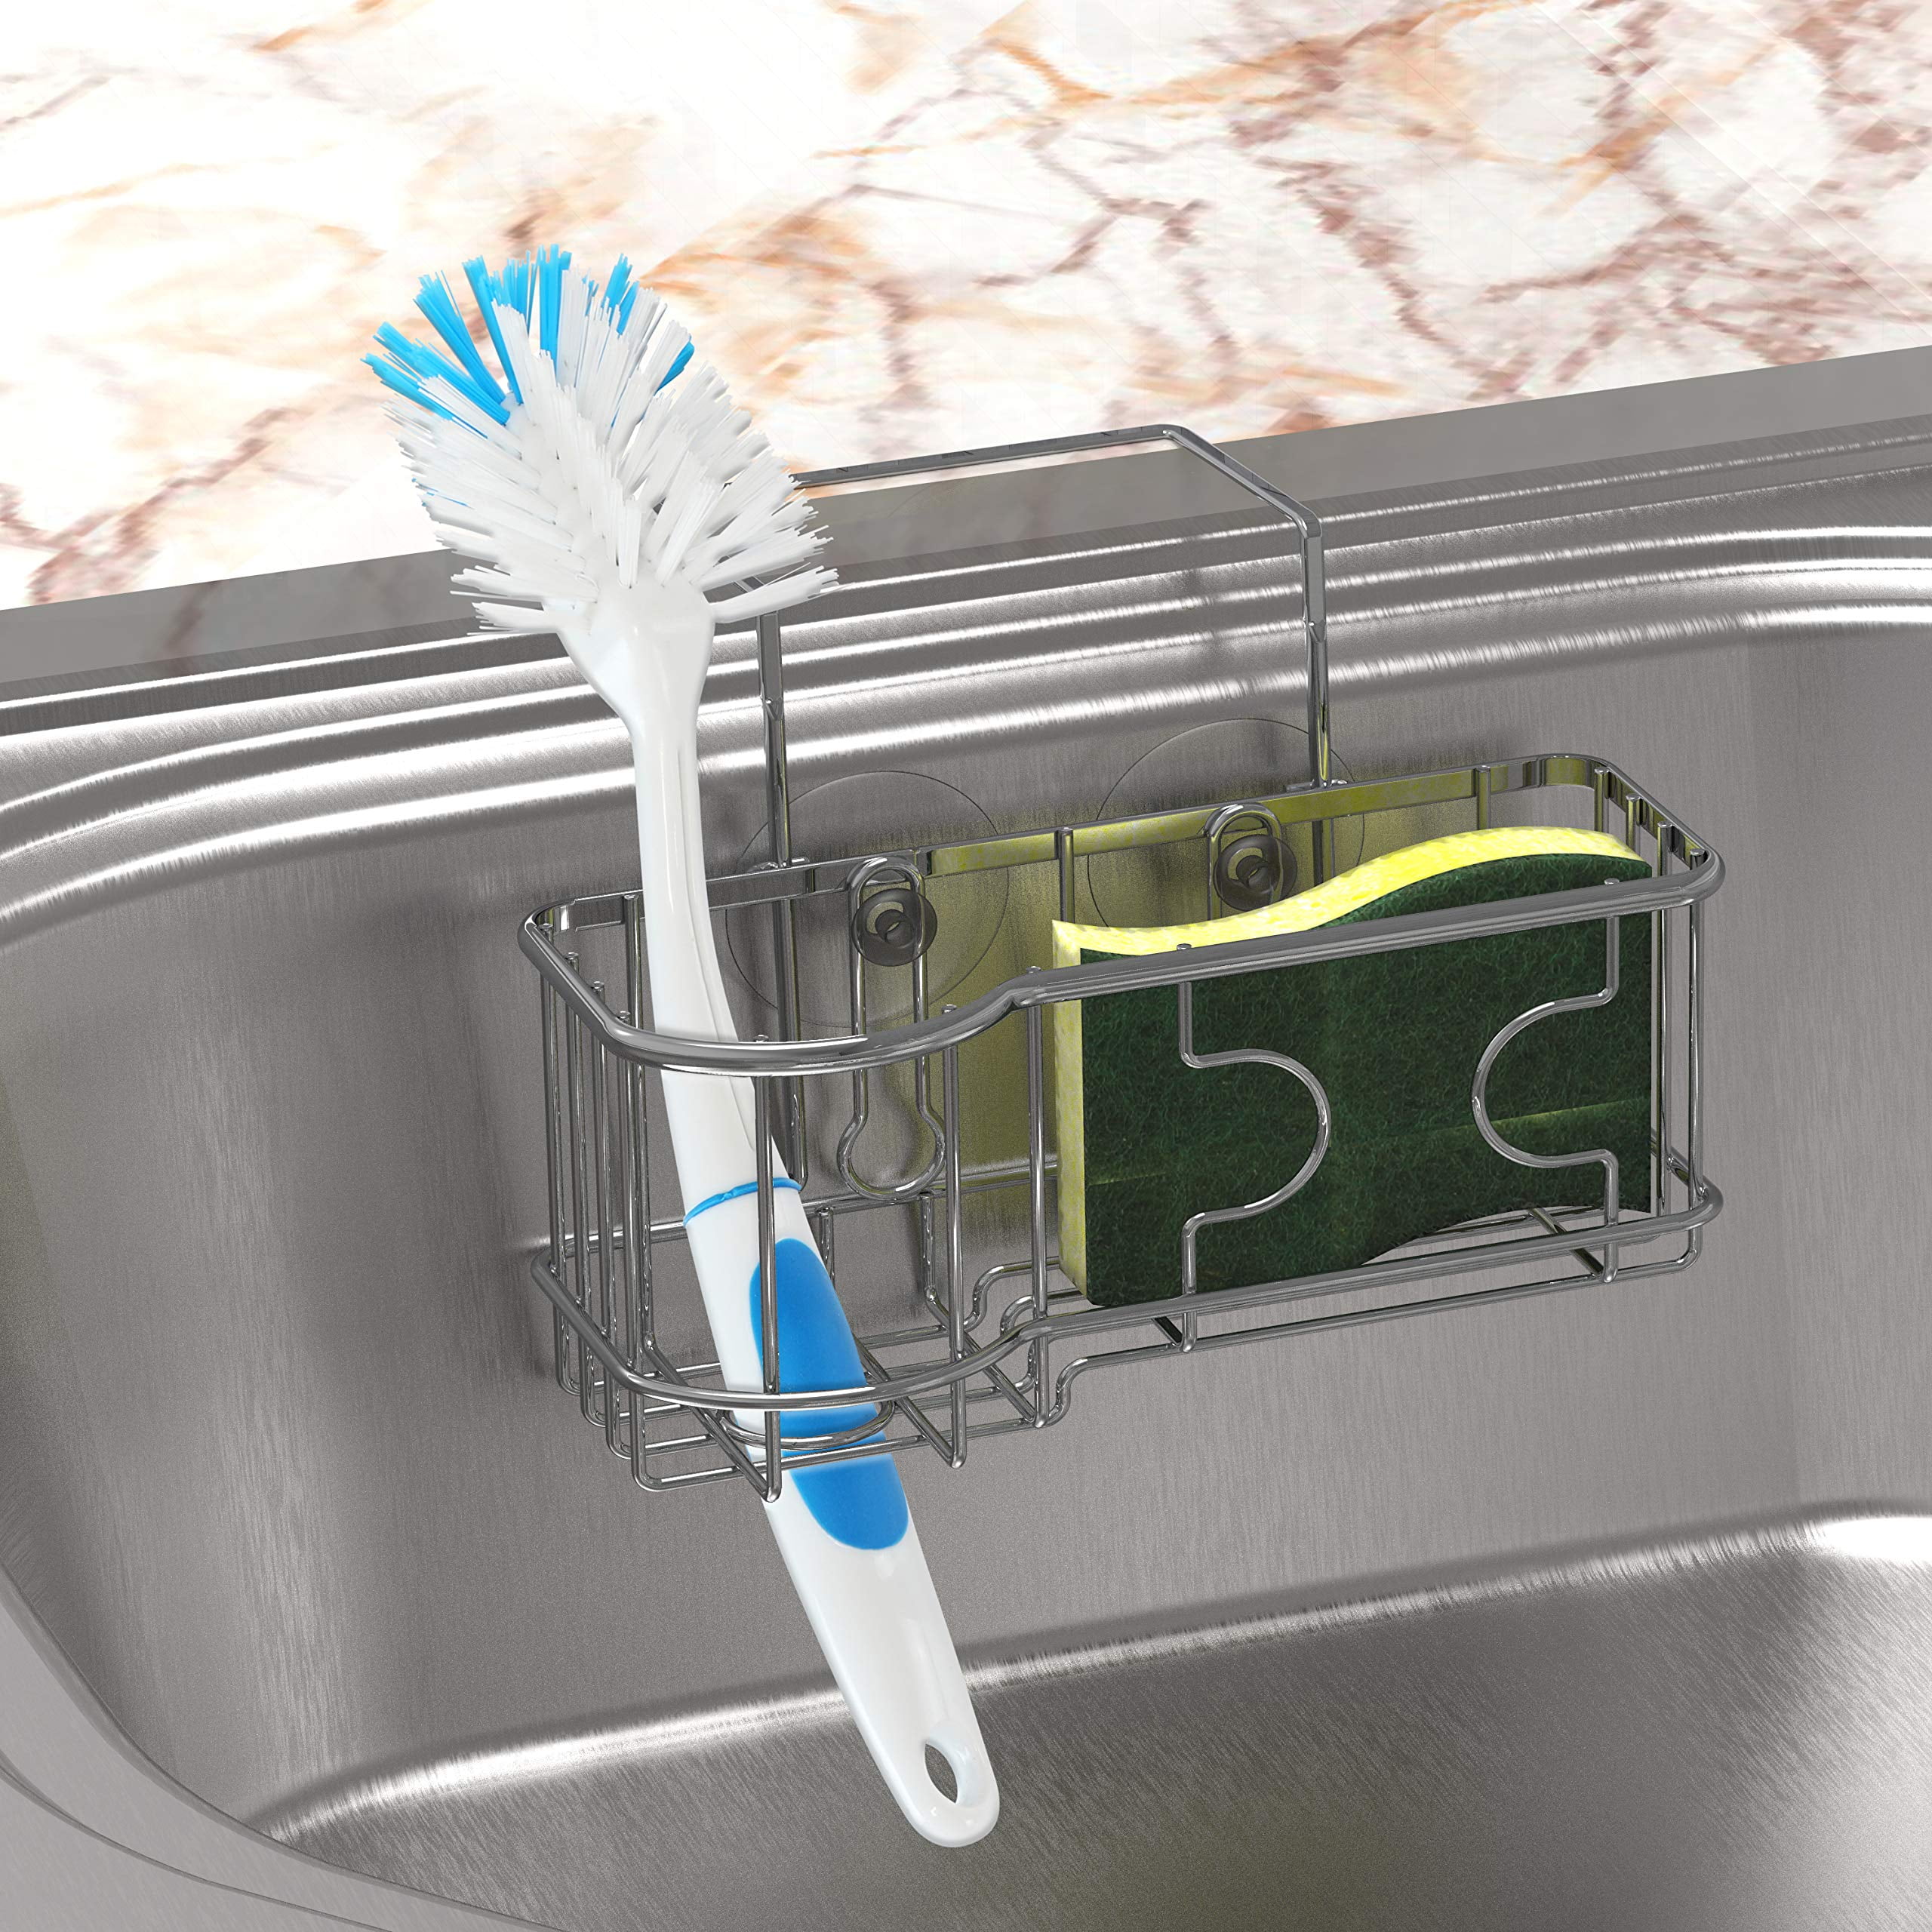 EEEkit Sink Organizer Sponge Holder, Kitchen Sink Caddy Brush Holder for Scrubbers, Soap, Bathroom, Size: 20*11*9cm, Gray